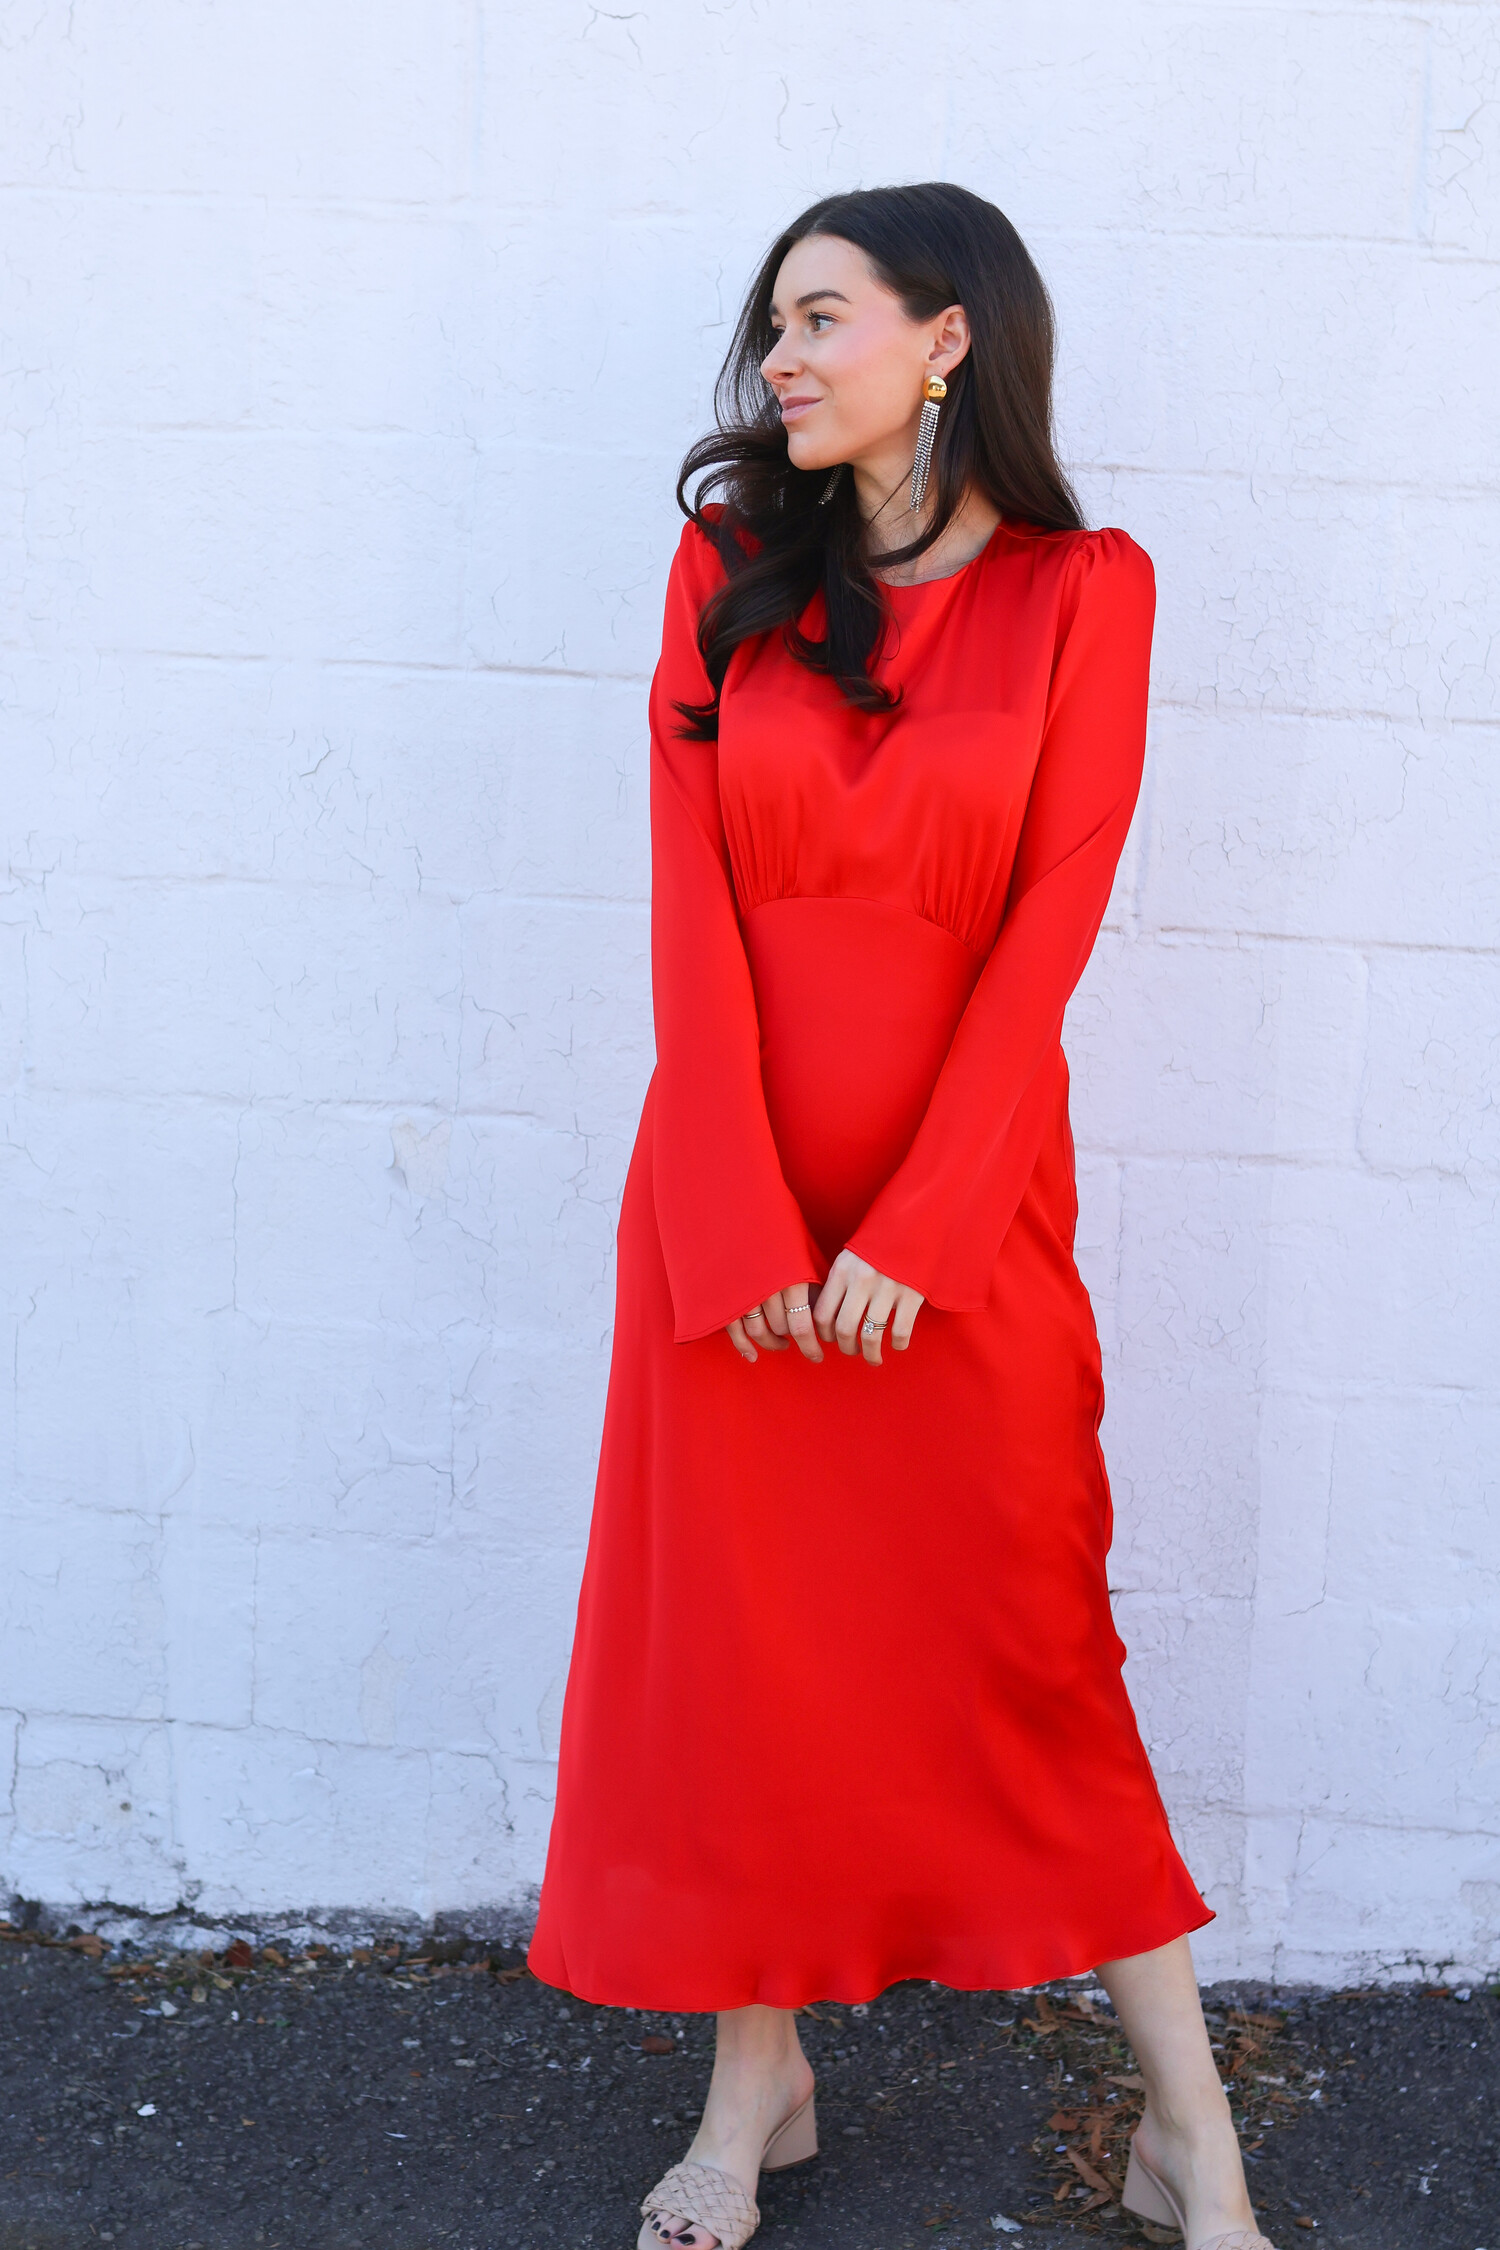 Buy Athena Burgundy Lace Maxi Dress - Dresses for Women 7409159